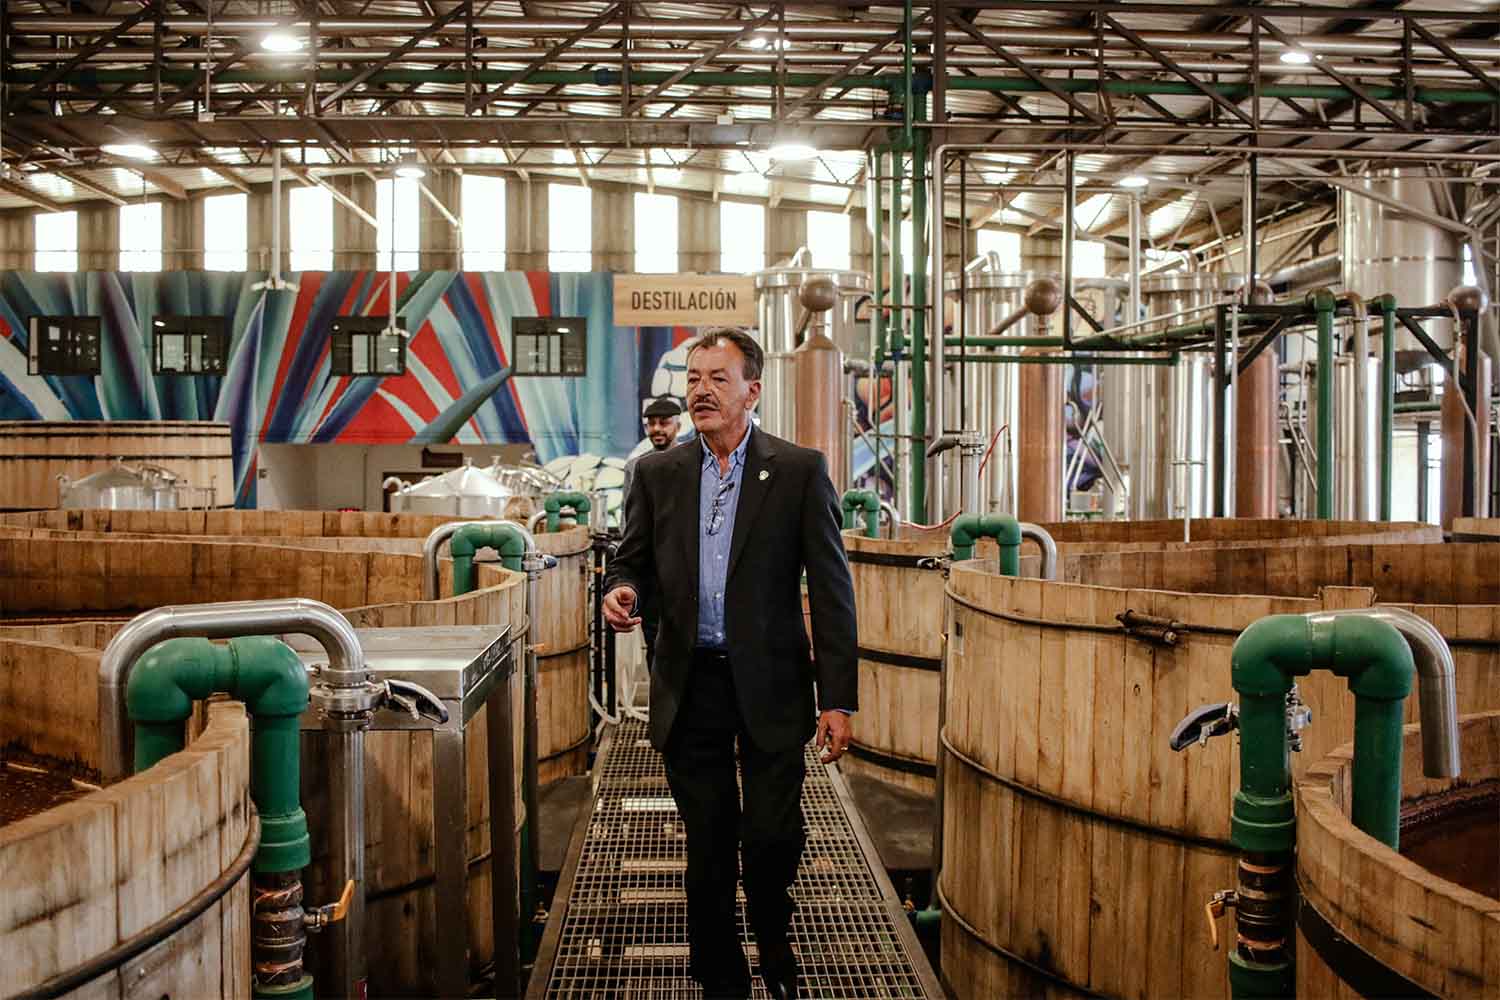 Carlos Camarena, the Master Distiller behind El Tesoro, Tapatío and the terroir-focused Tequila Ocho, in the Ocho distillery